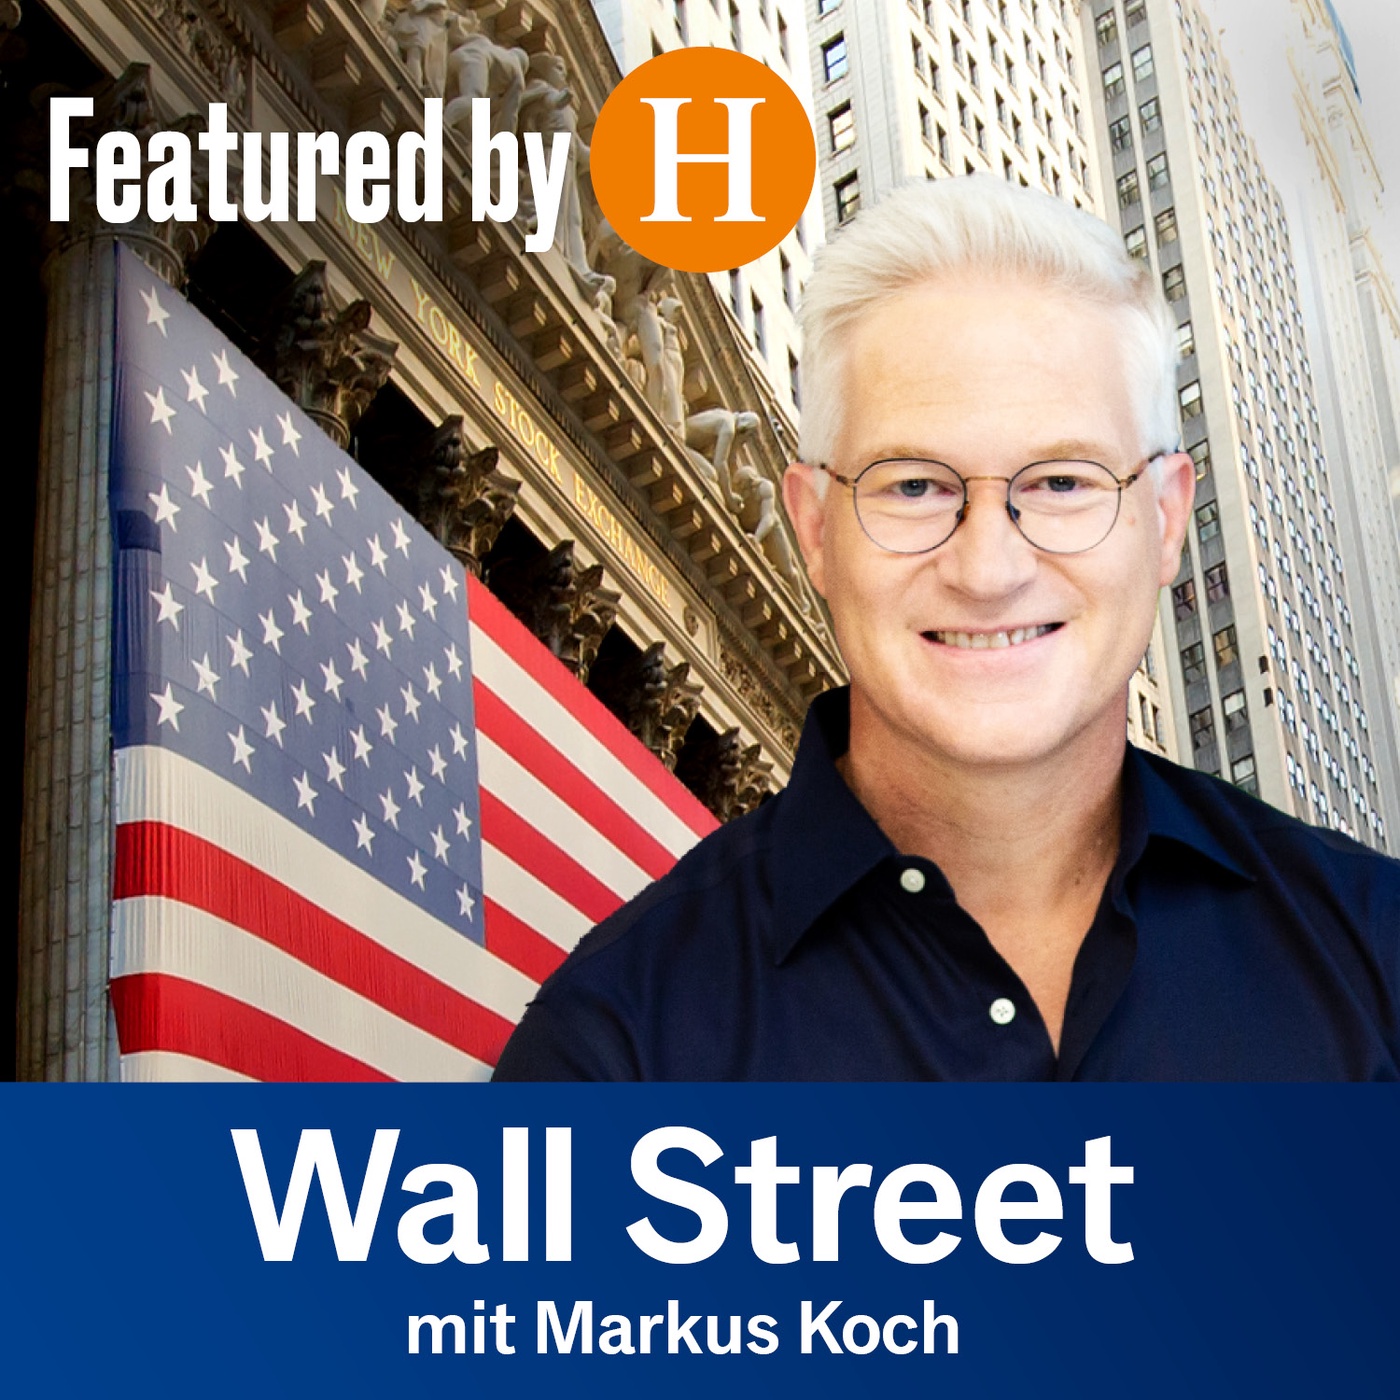 Wall Street mit Markus Koch - featured by Handelsblatt